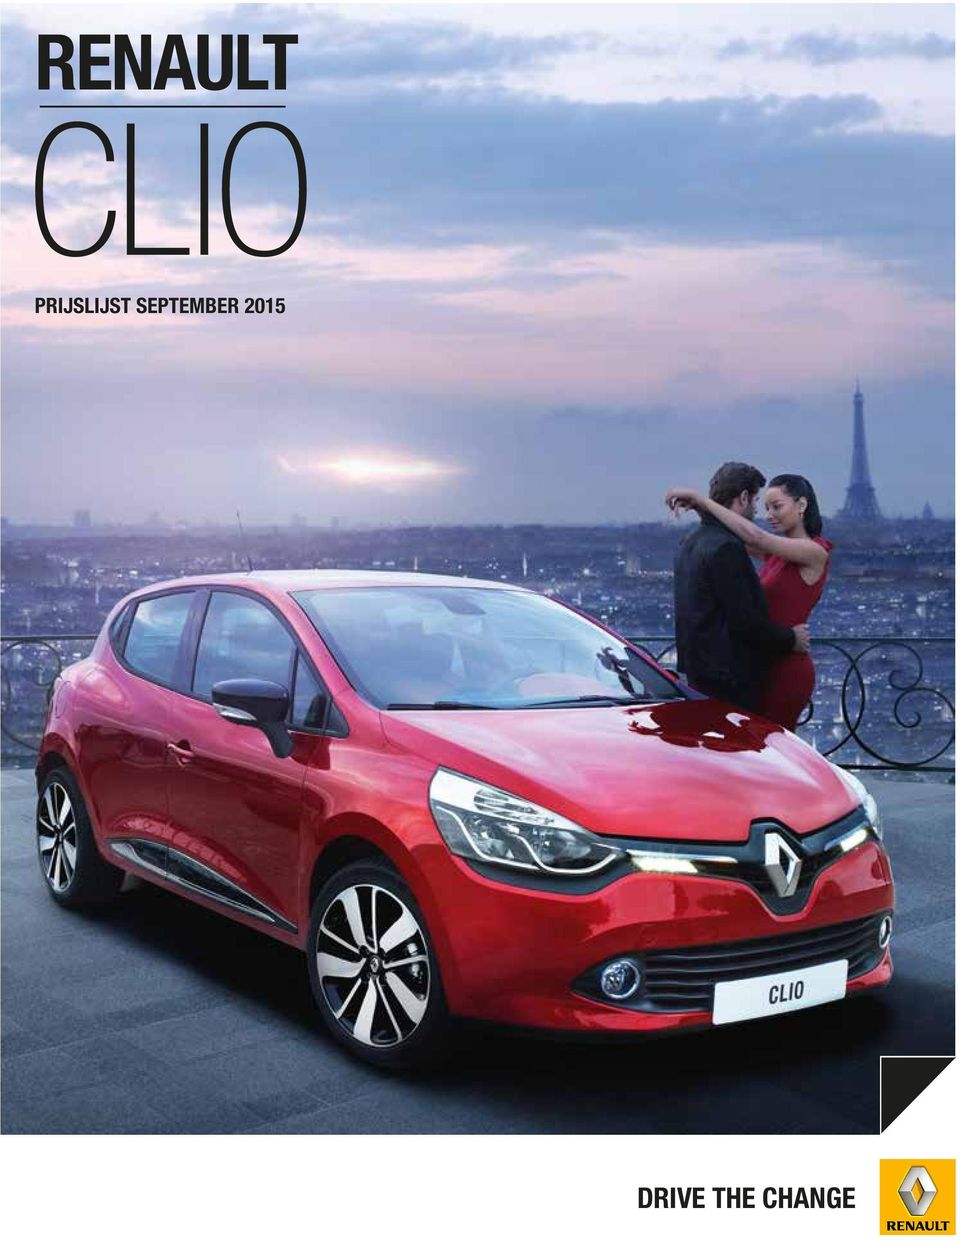 RENAULT CLIO PRIJSLIJST SEPTEMBER 2015 DRIVE THE CHANGE - PDF Free Download